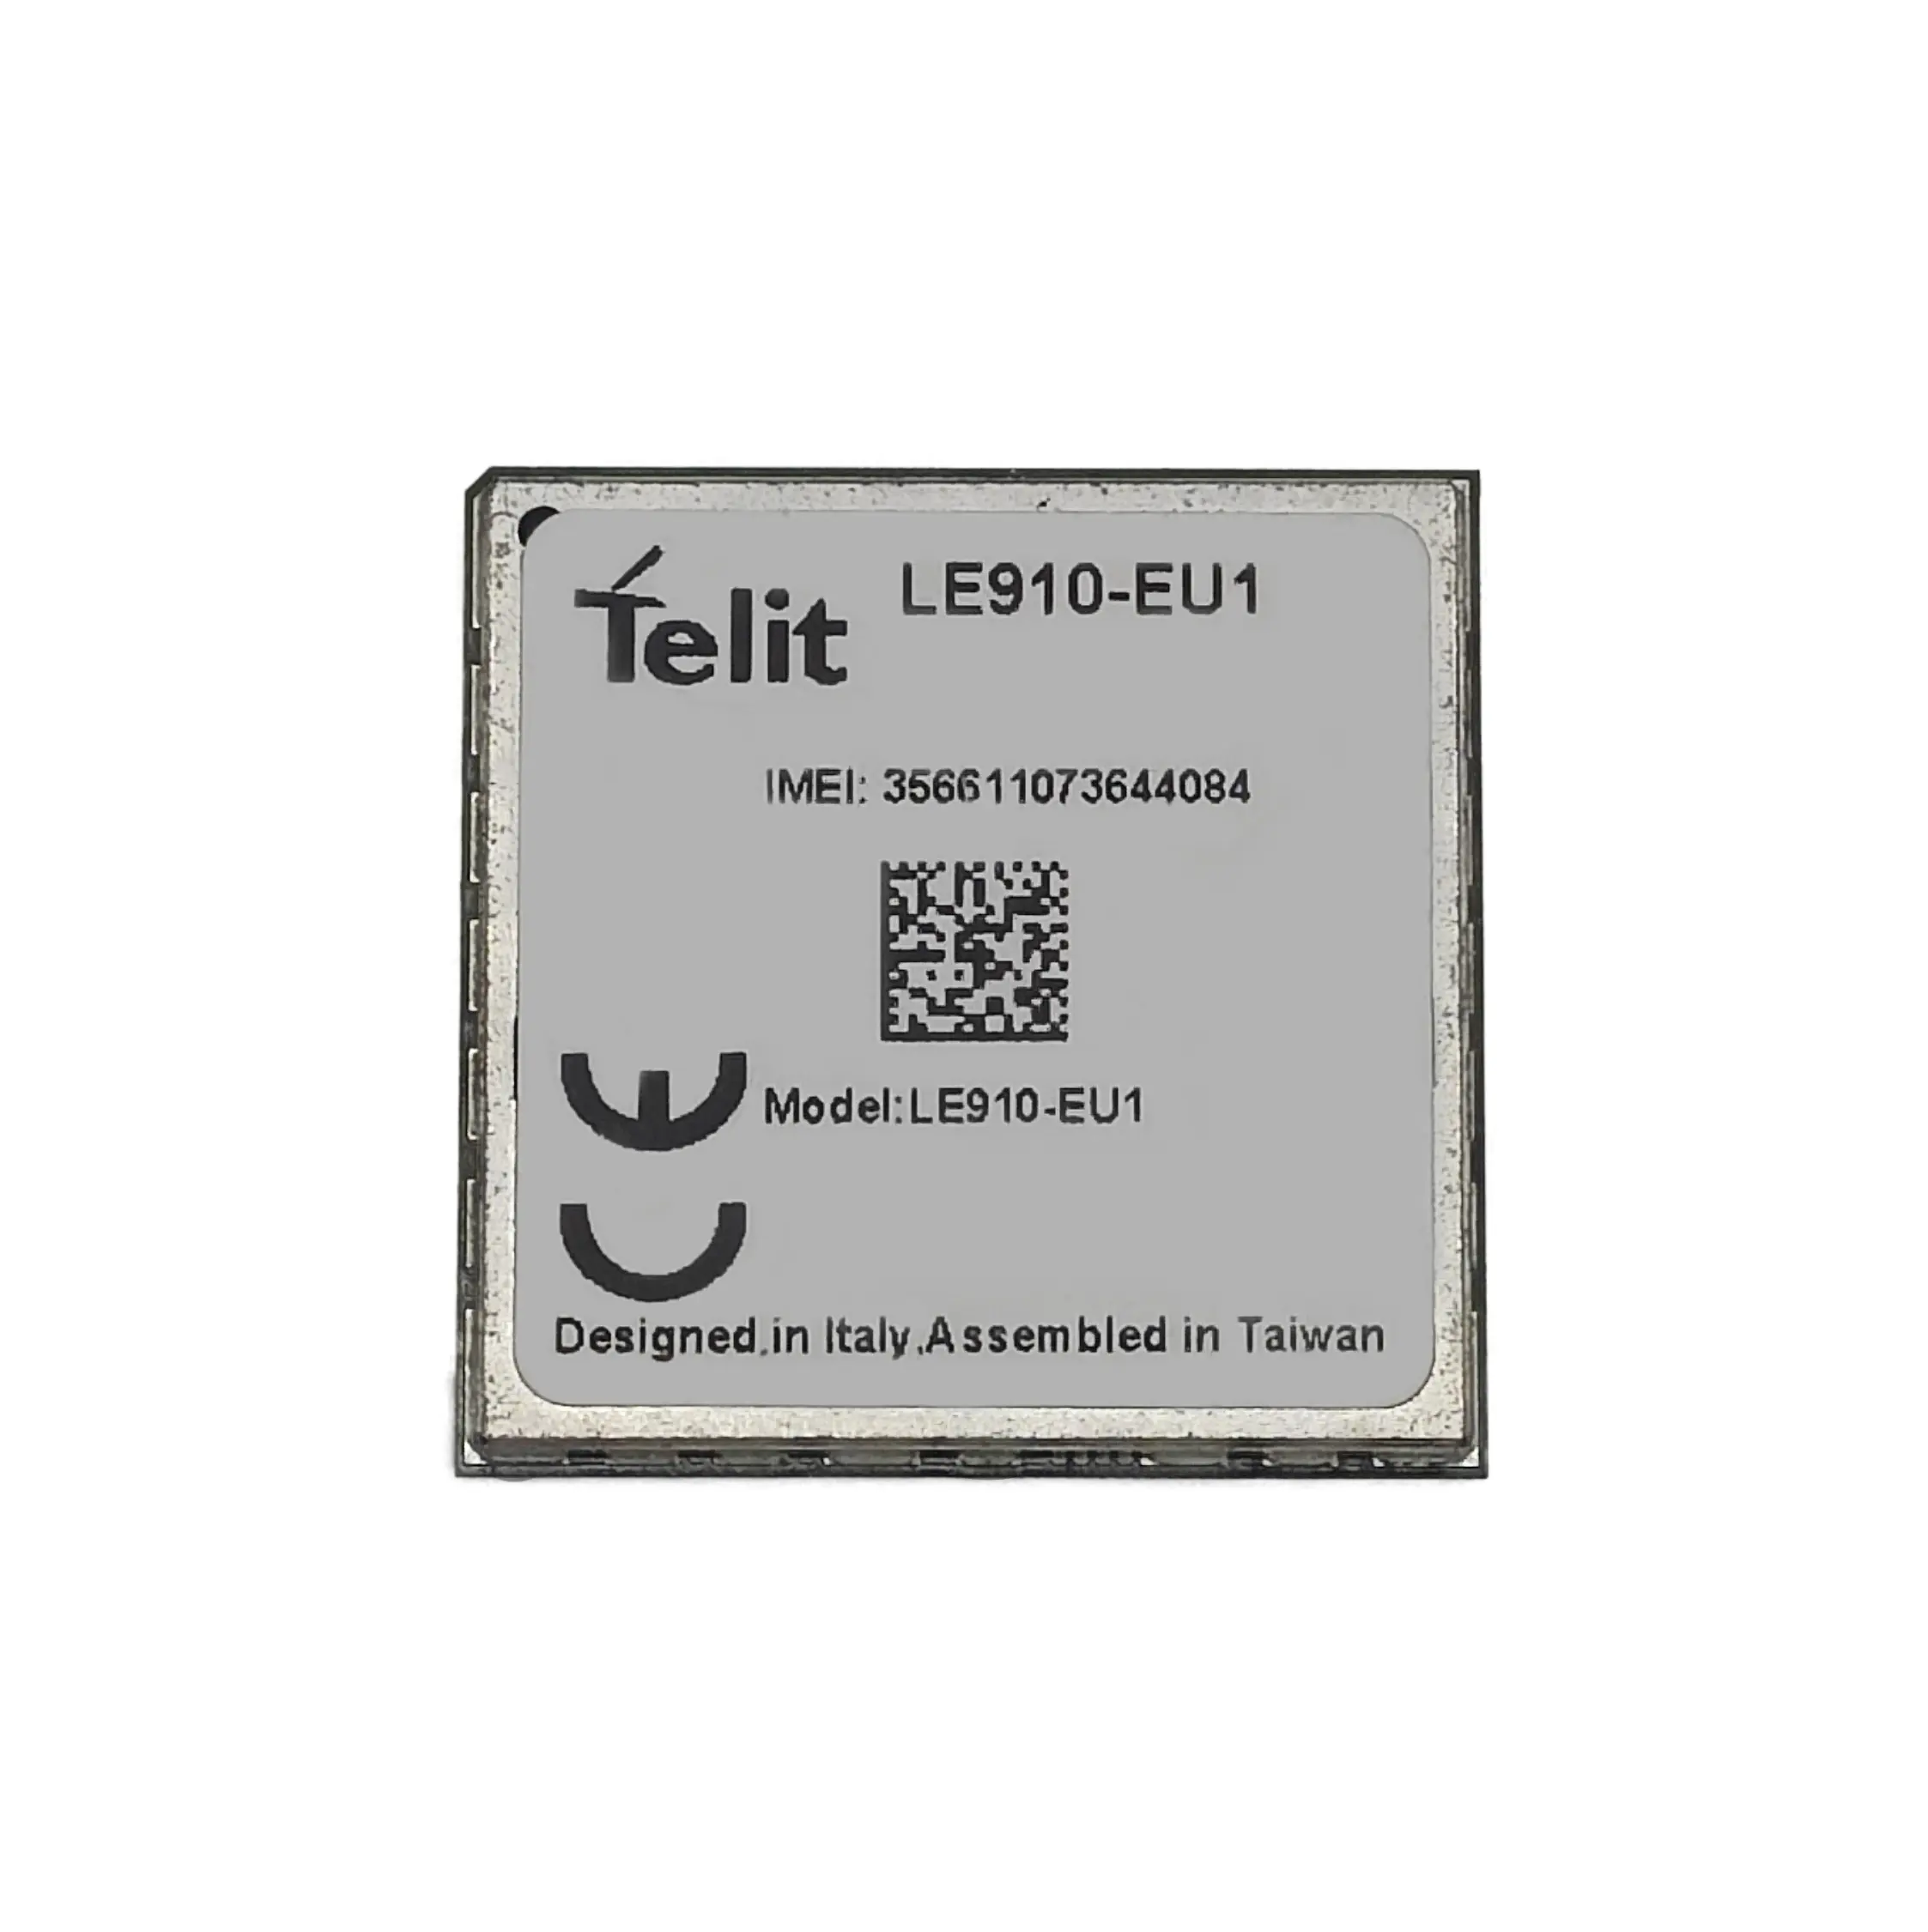 Telit-Módulo de LE910-EU1 LE910C1-EU LTE Cat.1, el mejor enrutador VPN móvil 4G GSM con tarjetas SIM duales y módulo Telit